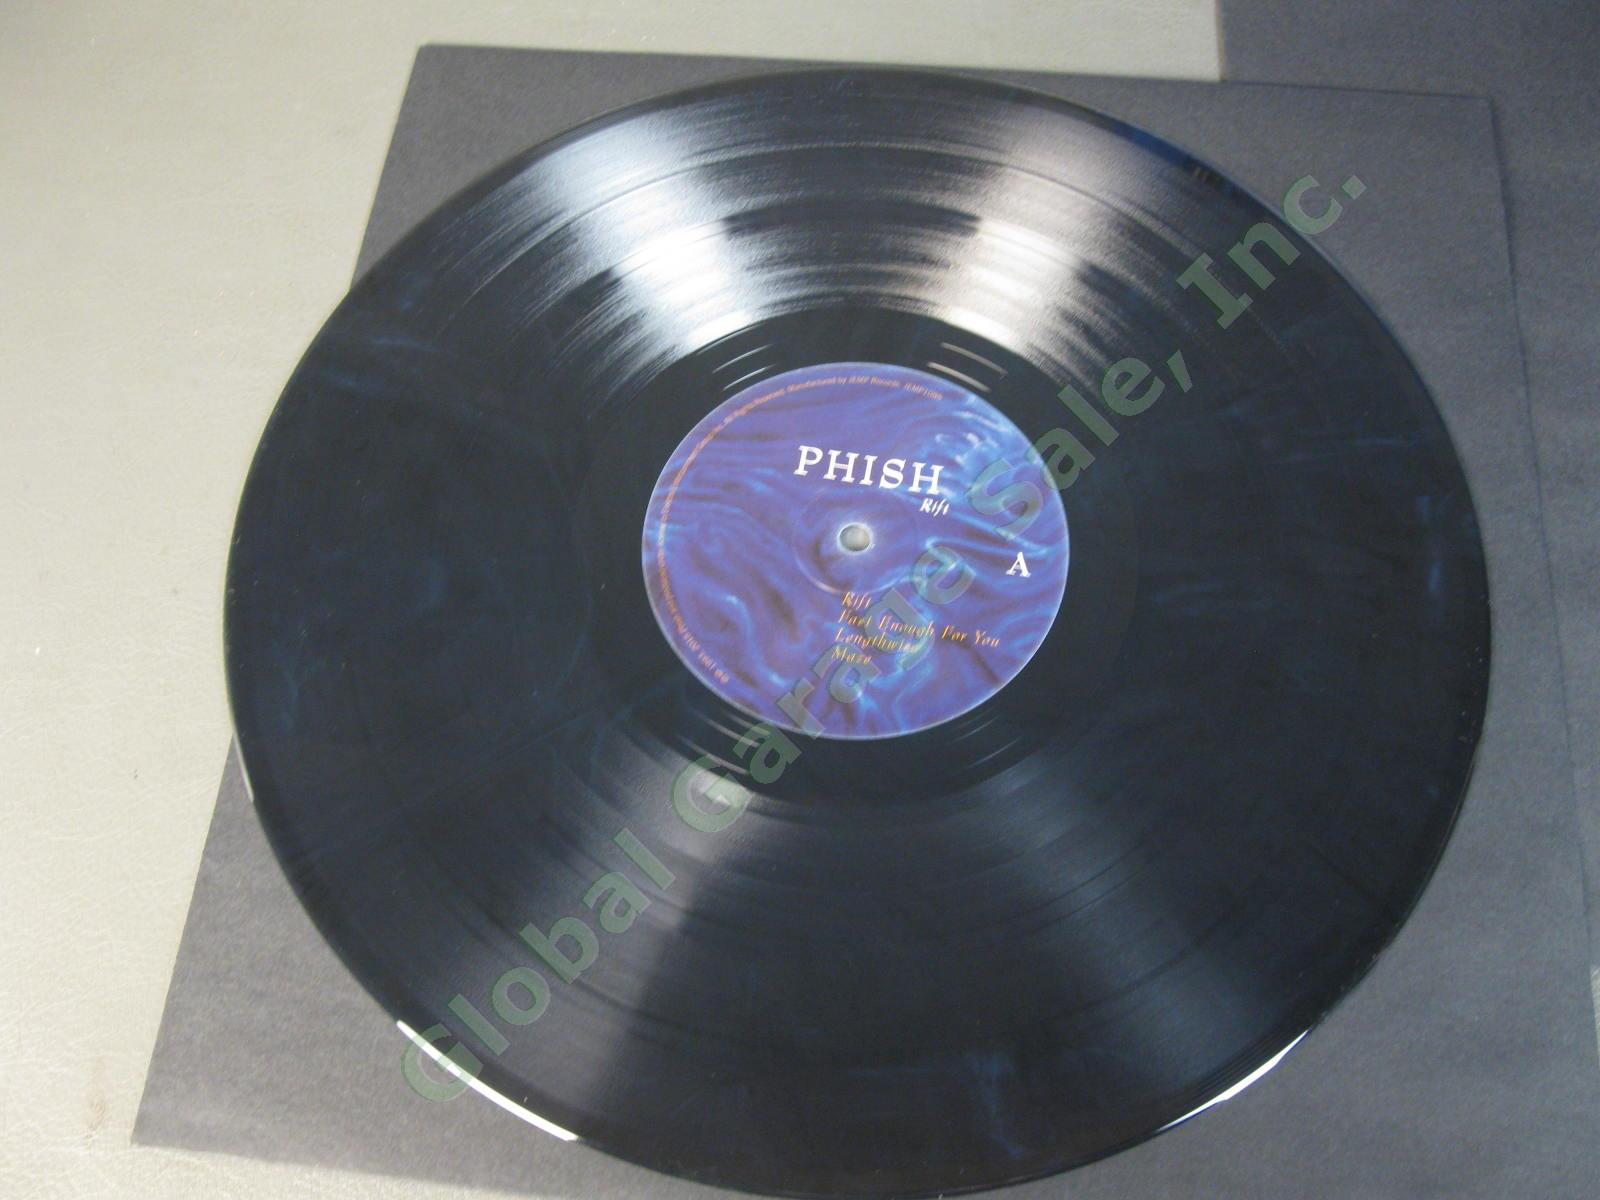 2015 PHISH Limited Edition Rift LP Record Album #8174 Welker Print Jemp1085 NR 6